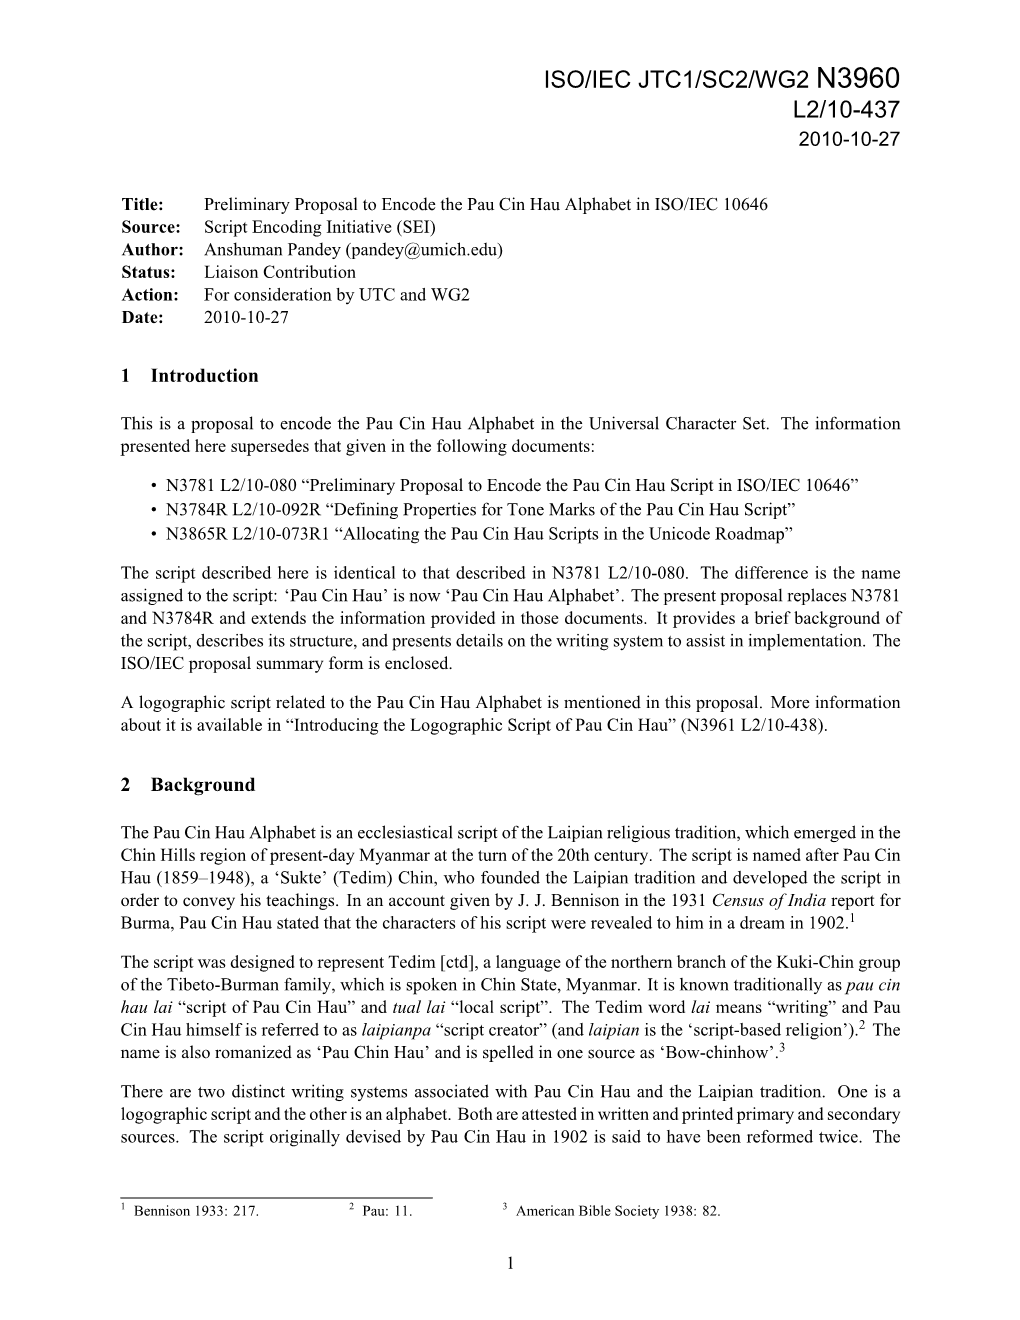 Preliminary Proposal to Encode the Pau Cin Hau Alphabet in ISO/IEC